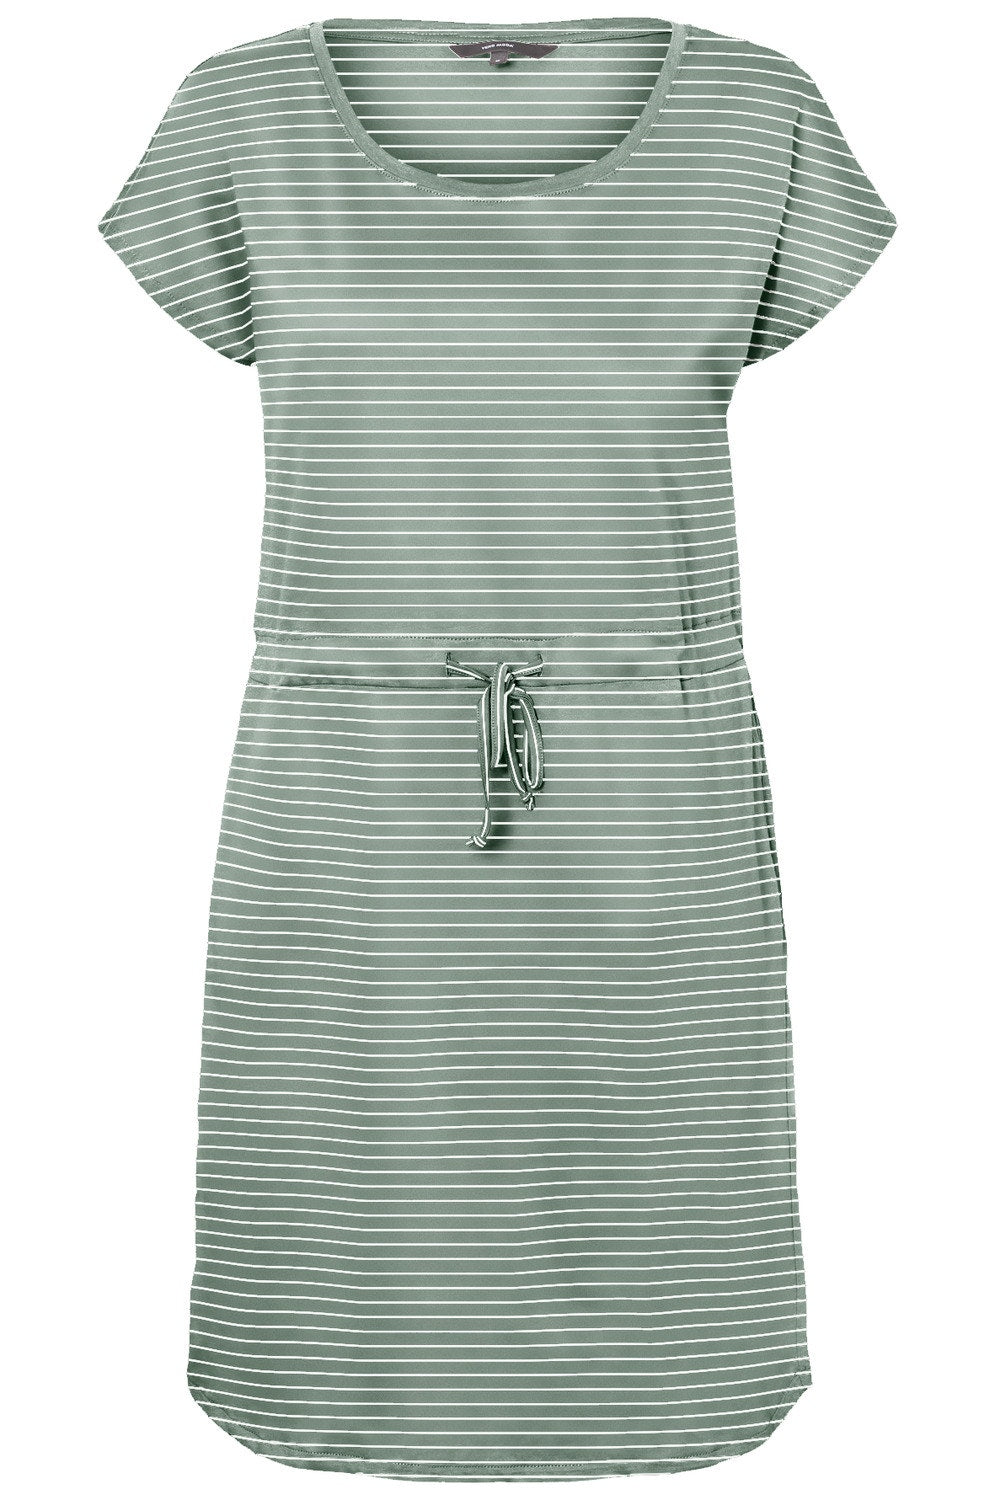 April Laurel Green Stripe T-Shirt Dress